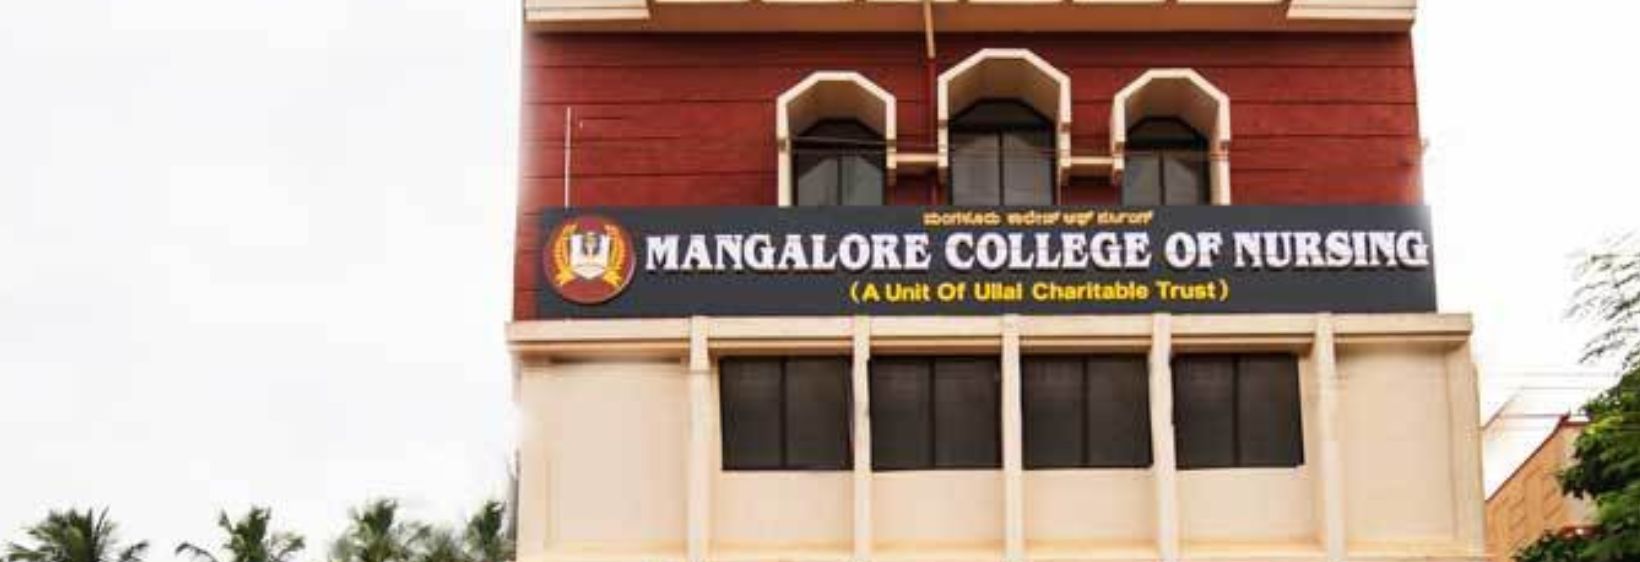 Mangalore College of Nursing - Mangalore